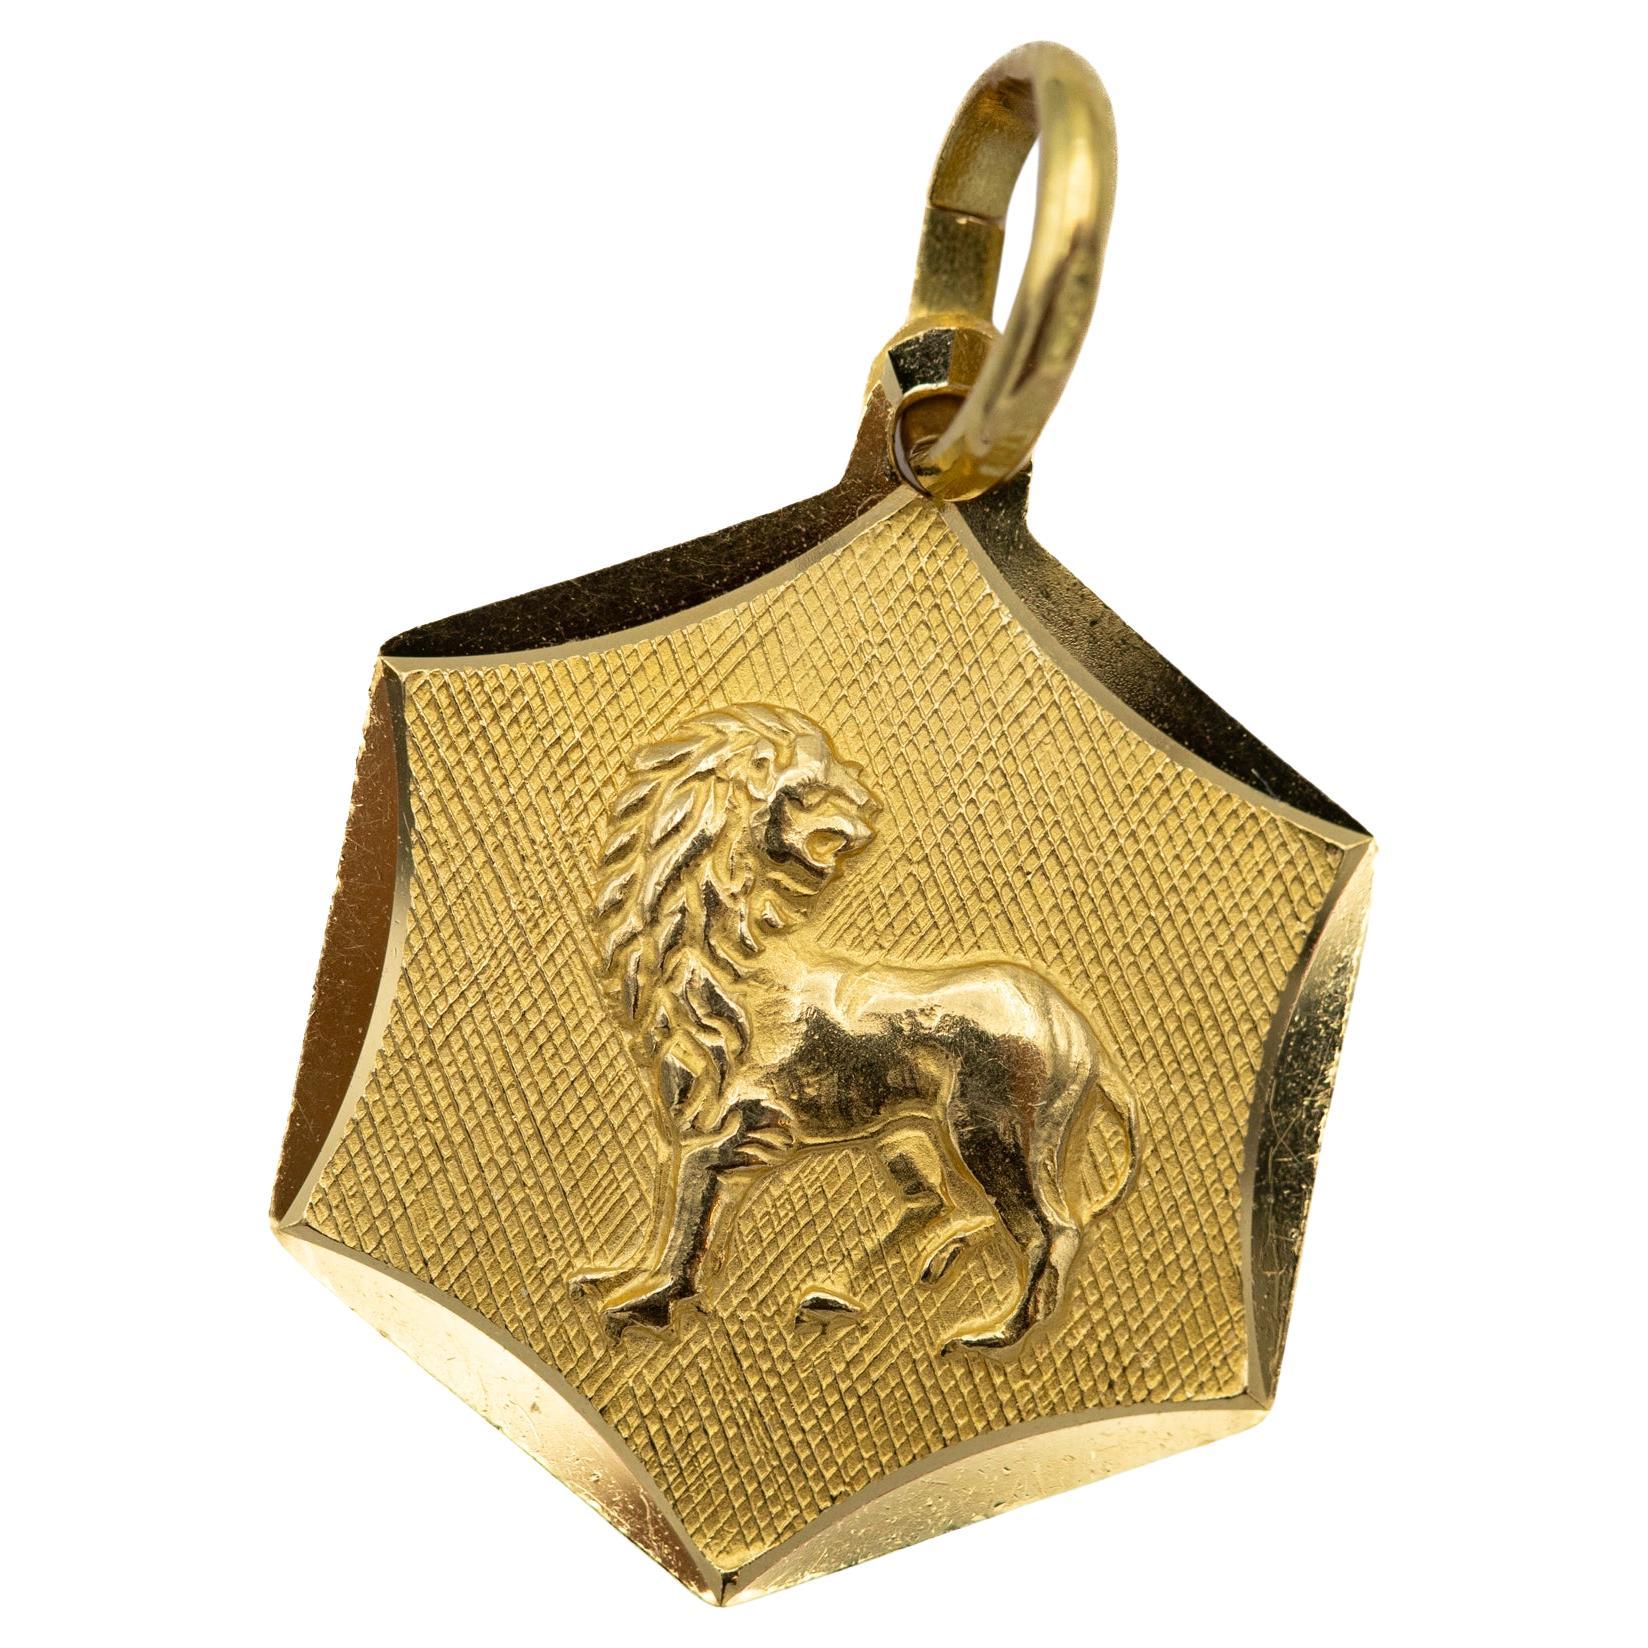 Vintage 18 k Italian zodiac charm pendant - Leo charm - solid yellow gold